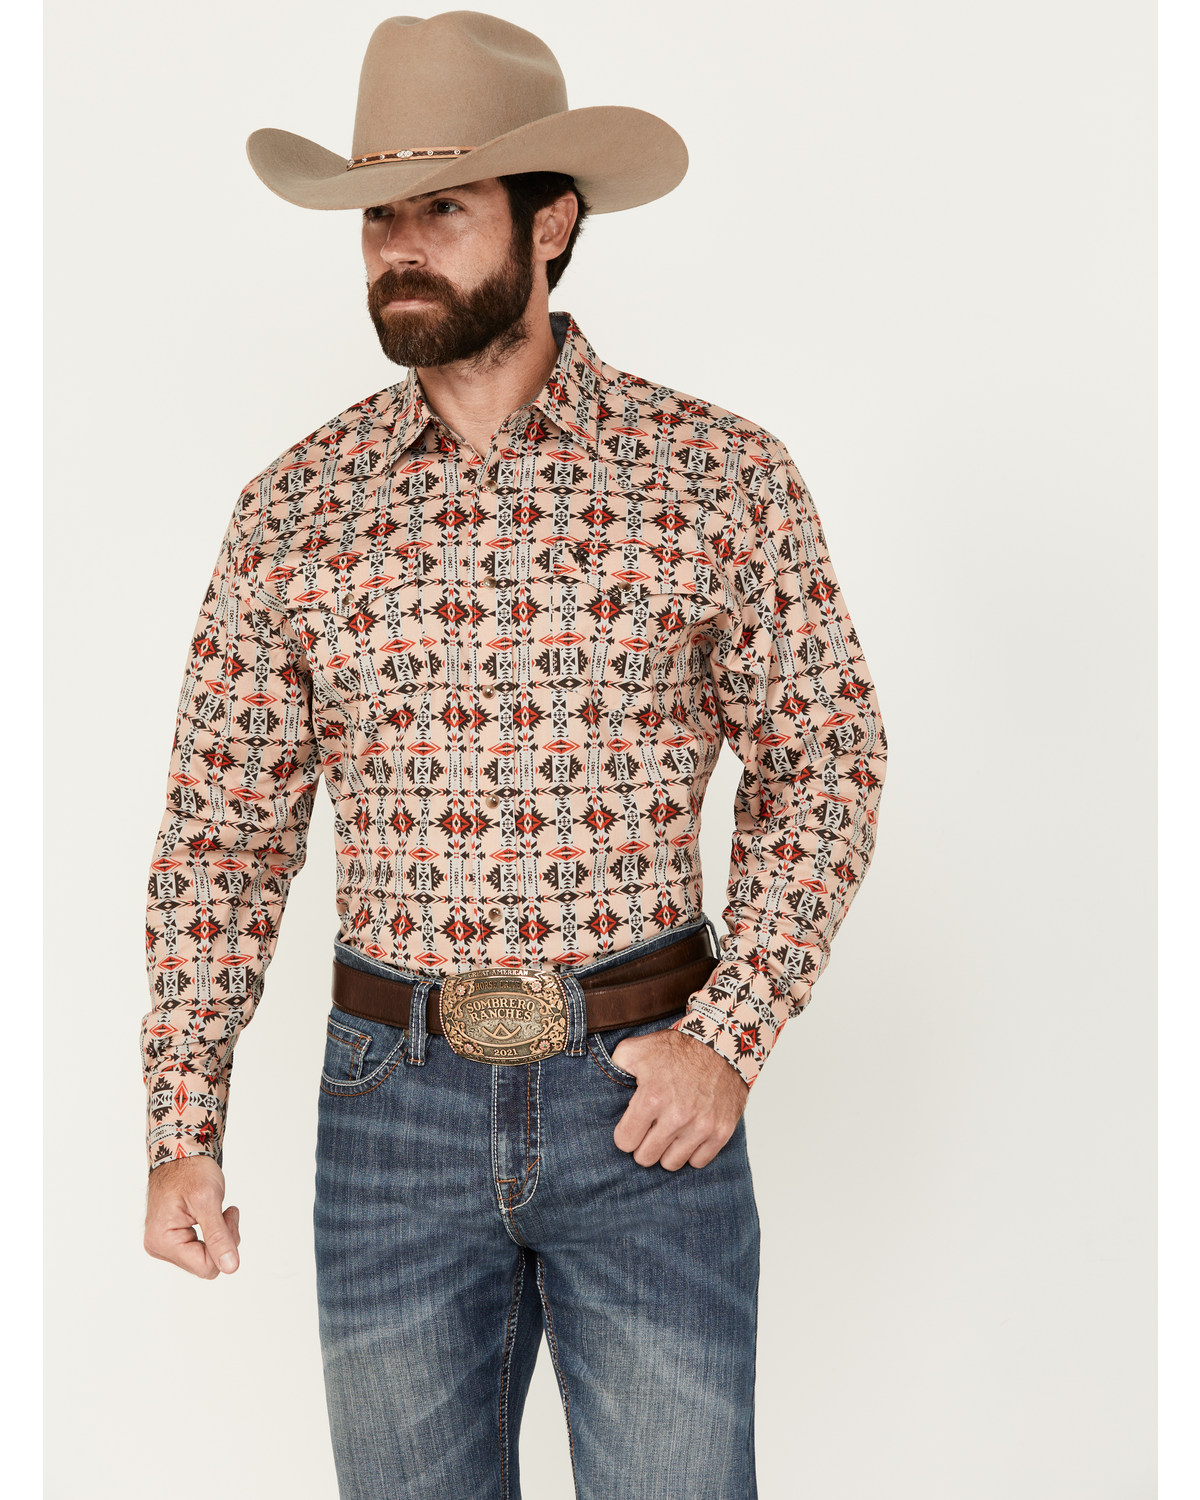 Rodeo Clothing Men's Southwestern Print Long Sleeve Snap Stretch Western Shirt